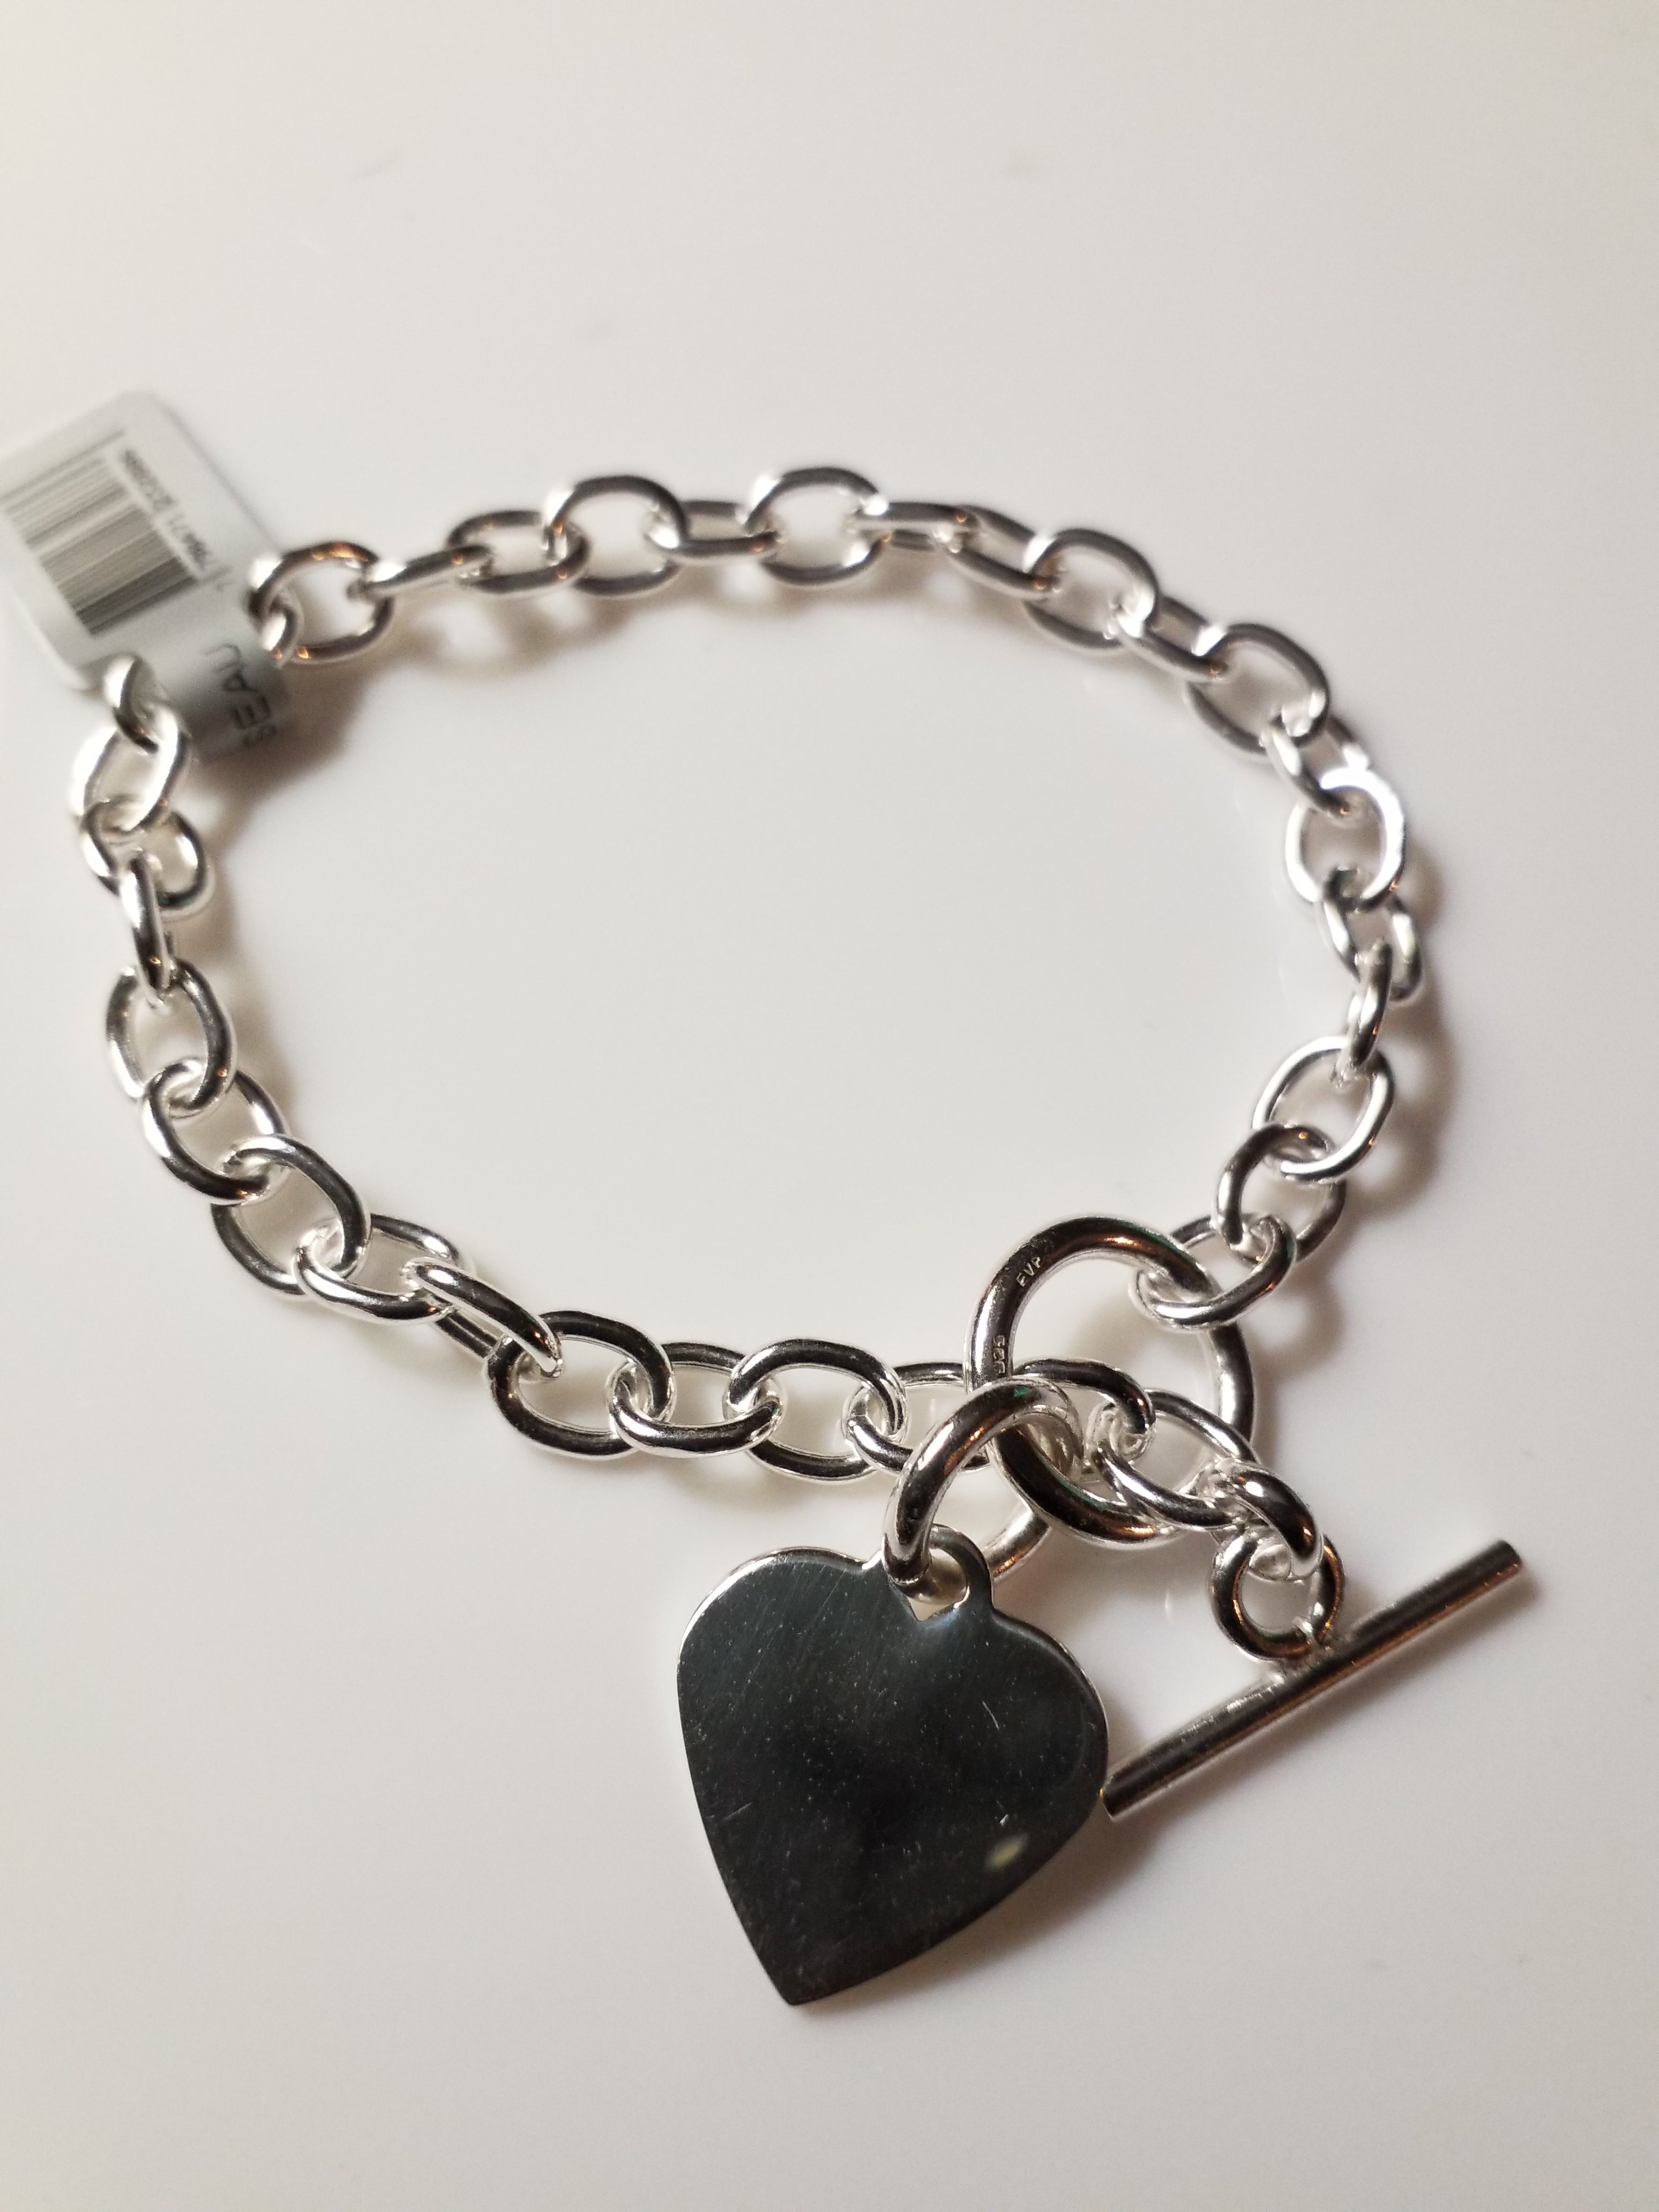 S/SBracelet - Tiffany Clasp with Engravable Heart